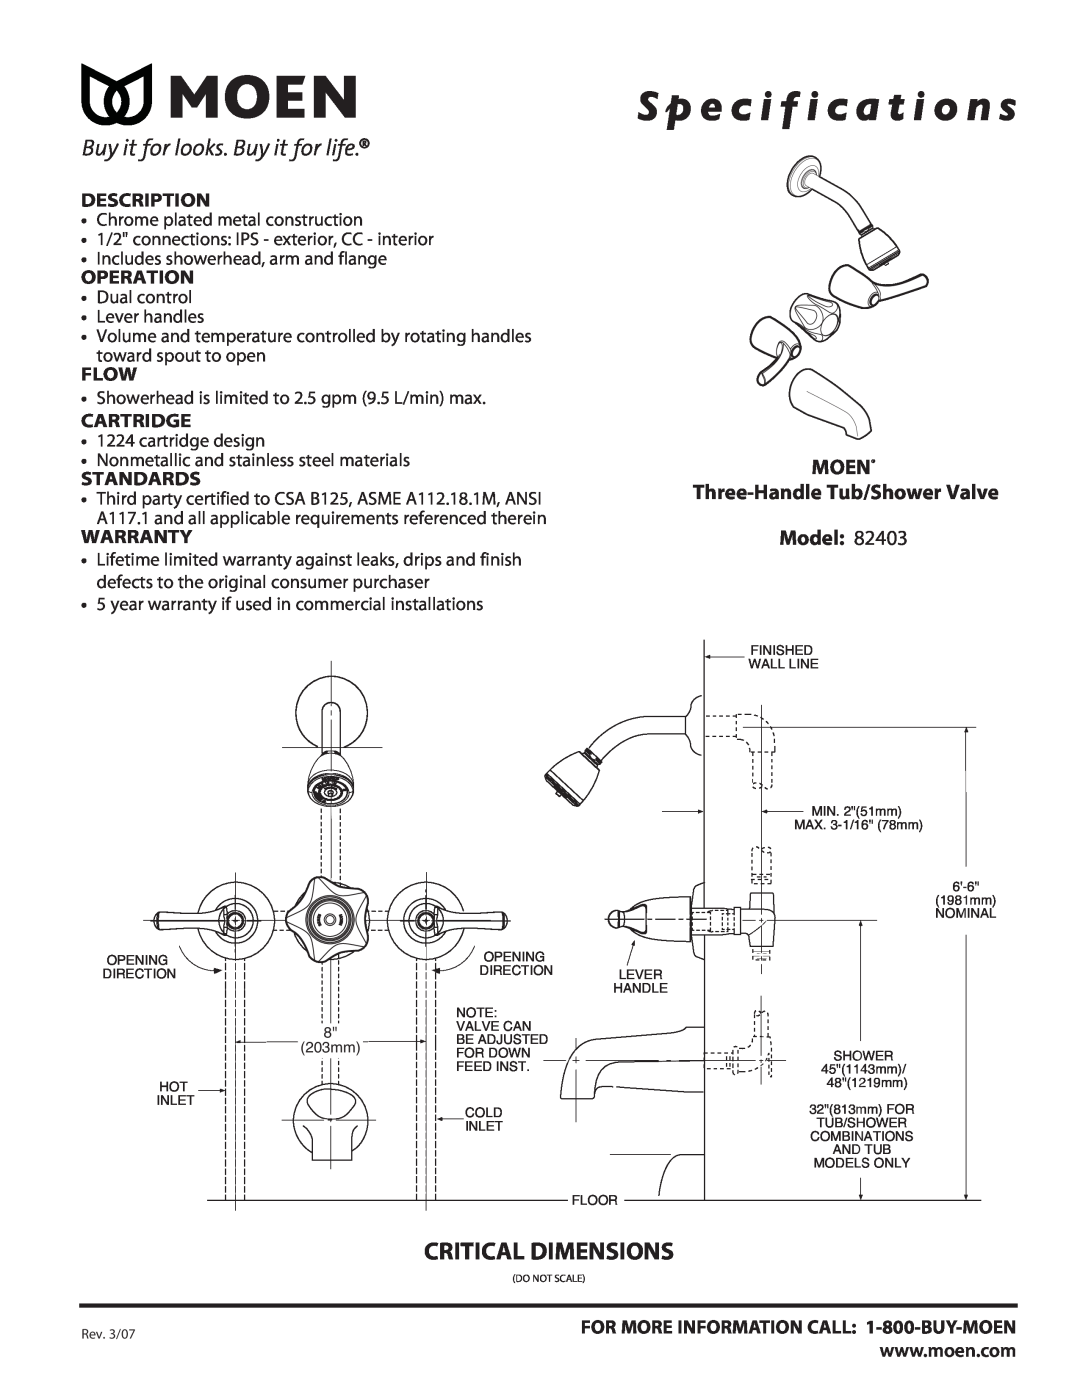 Moen 82403 warranty S p e c i f i c a t i o n s, Critical Dimensions, MOEN Three-Handle Tub/Shower Valve, Description 